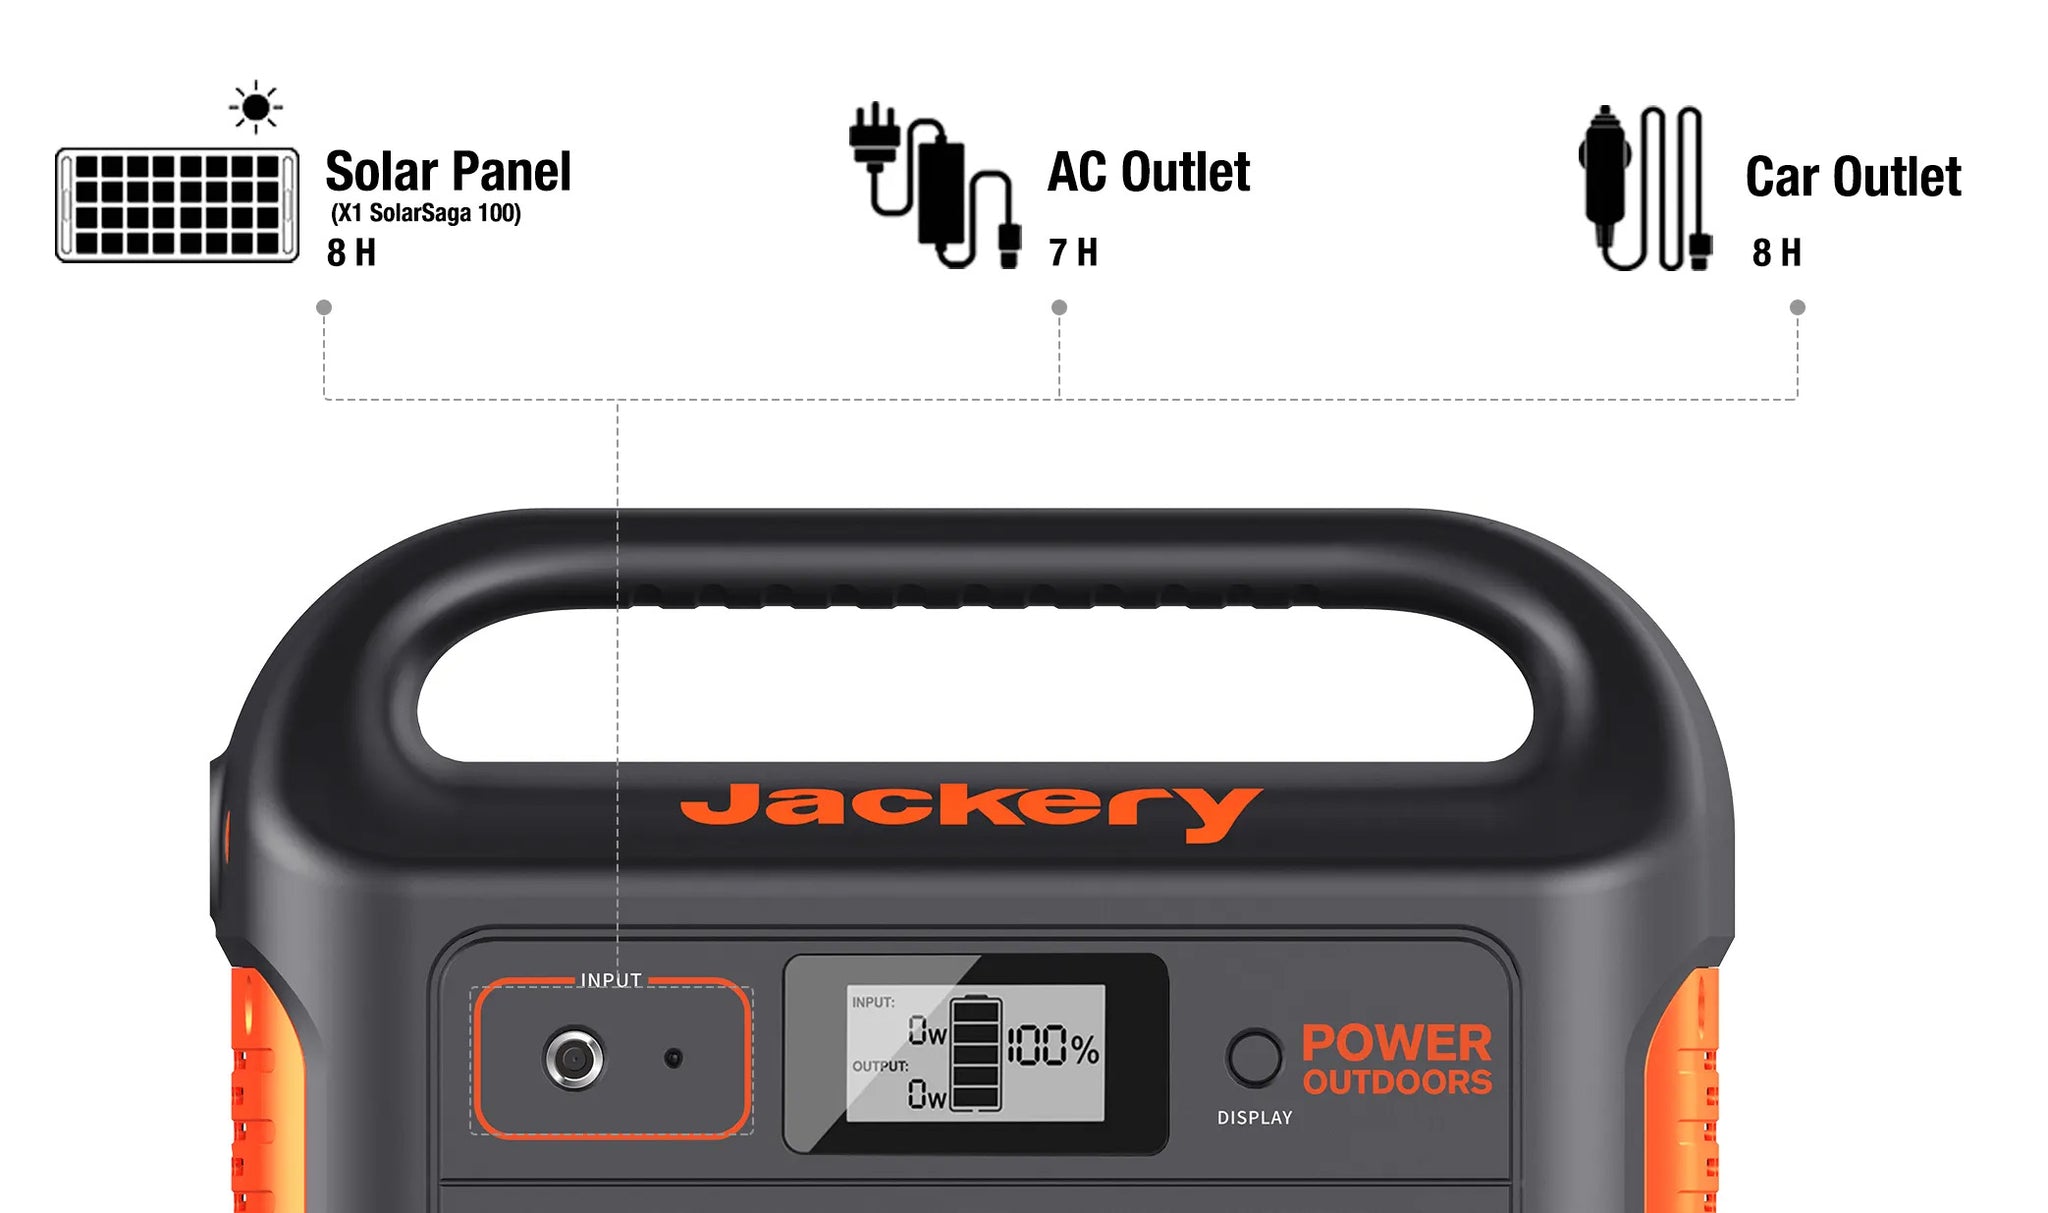 Three Flexible Ways to Recharge the Jackery Explorer 550 Portable Power Station